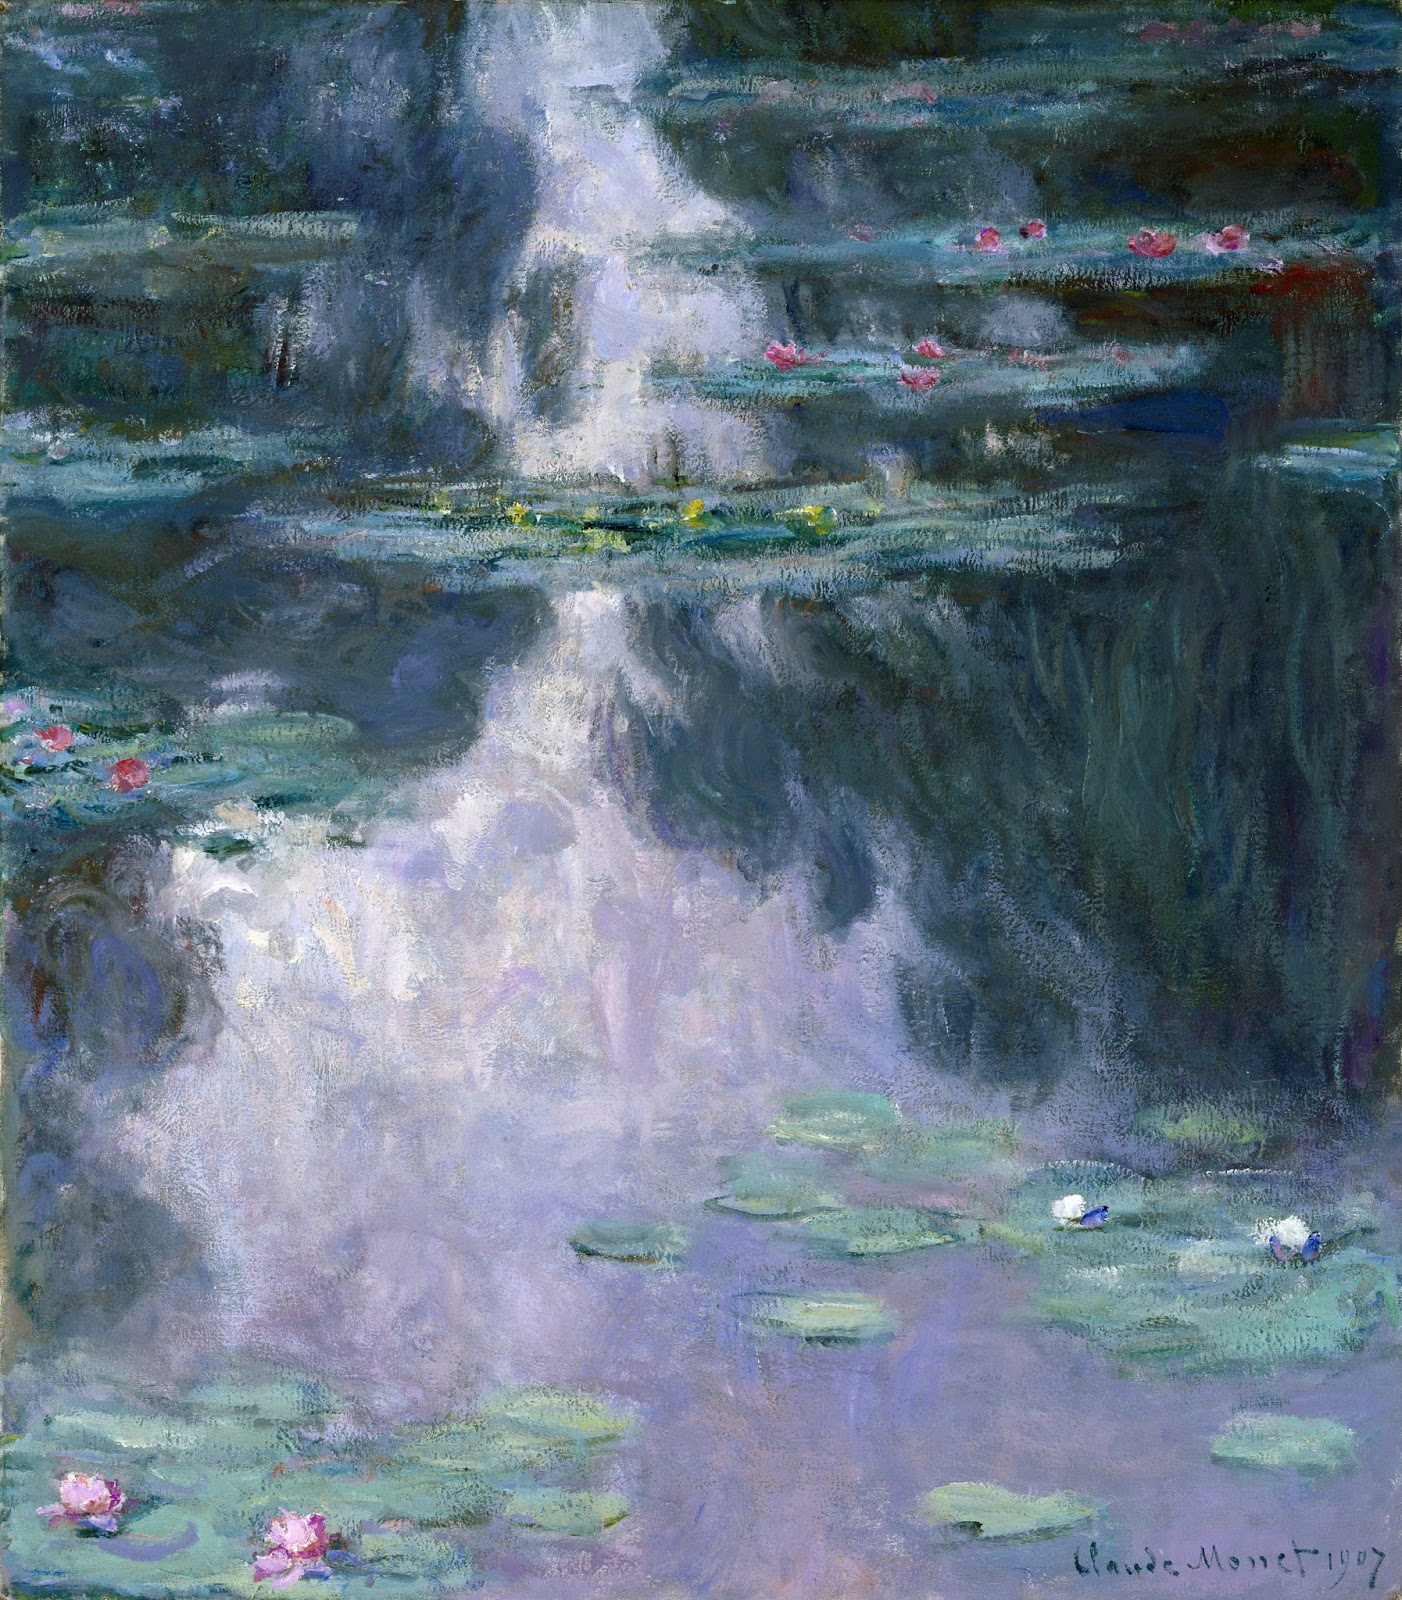 Claude+Monet-1840-1926 (1005).jpg